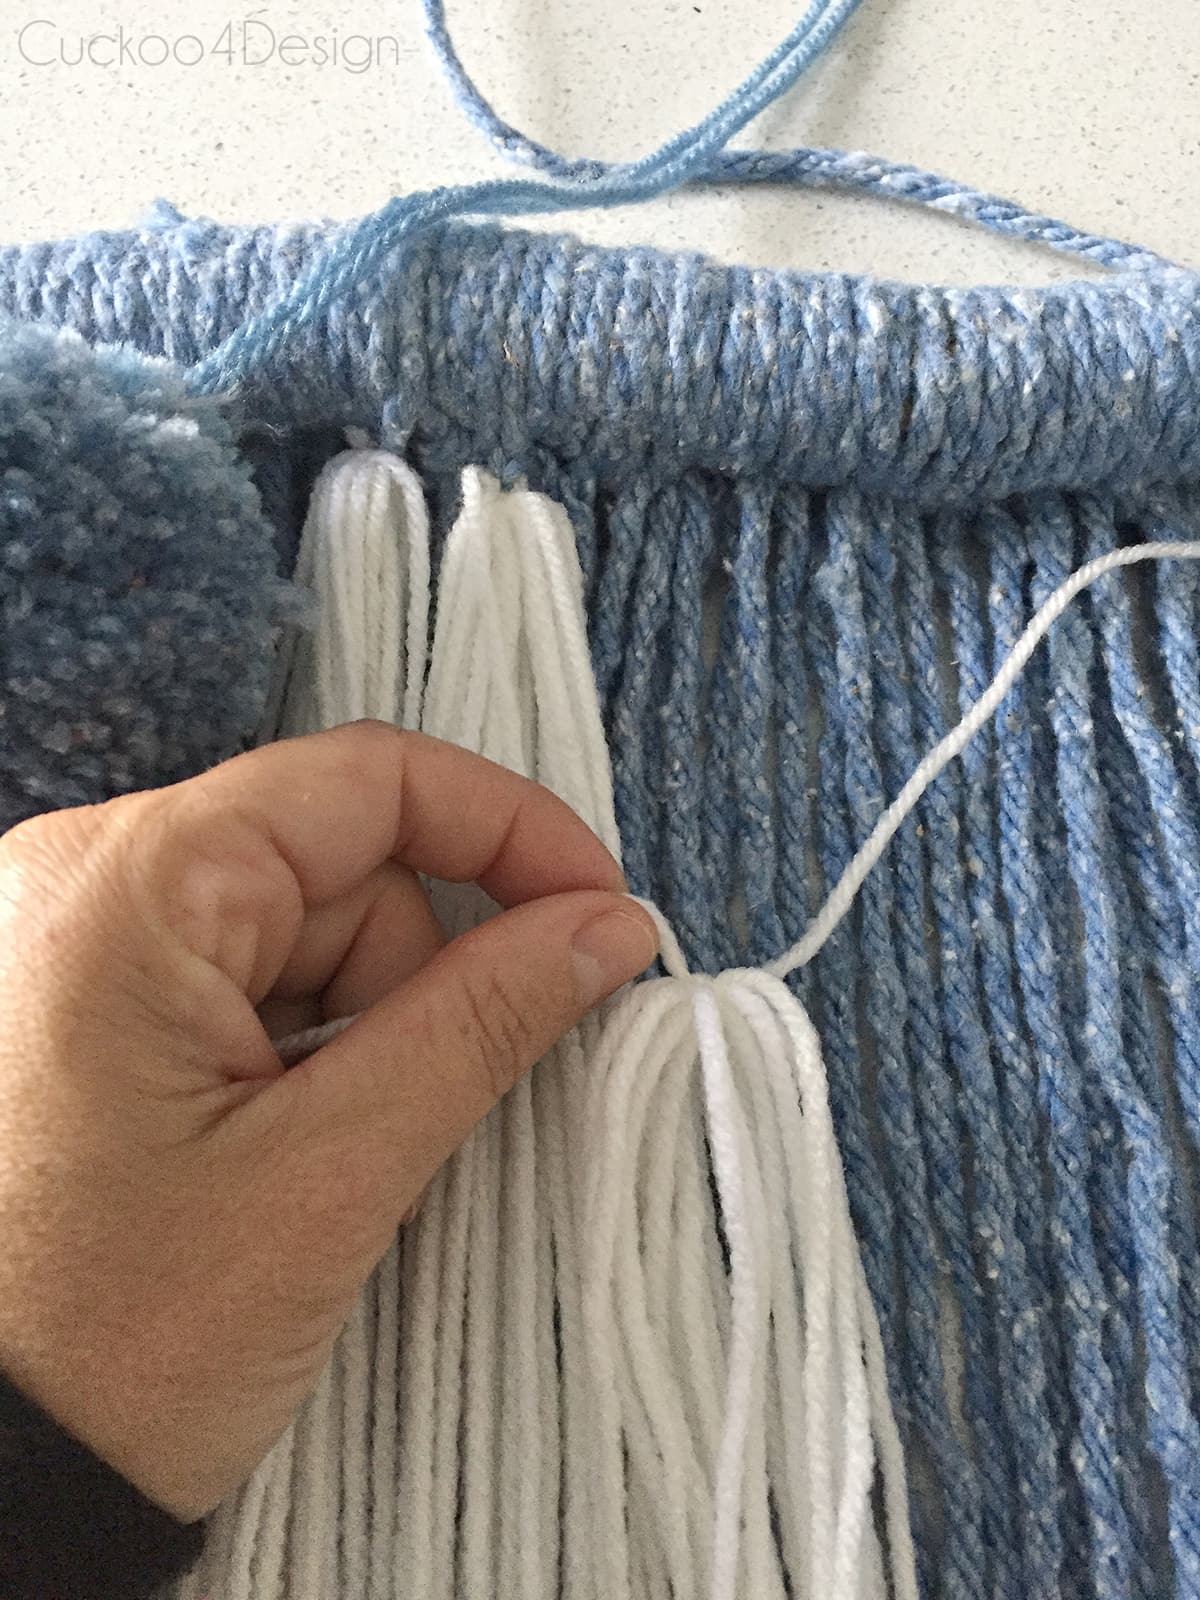 tying wool detail to mop head yarn wall hanging